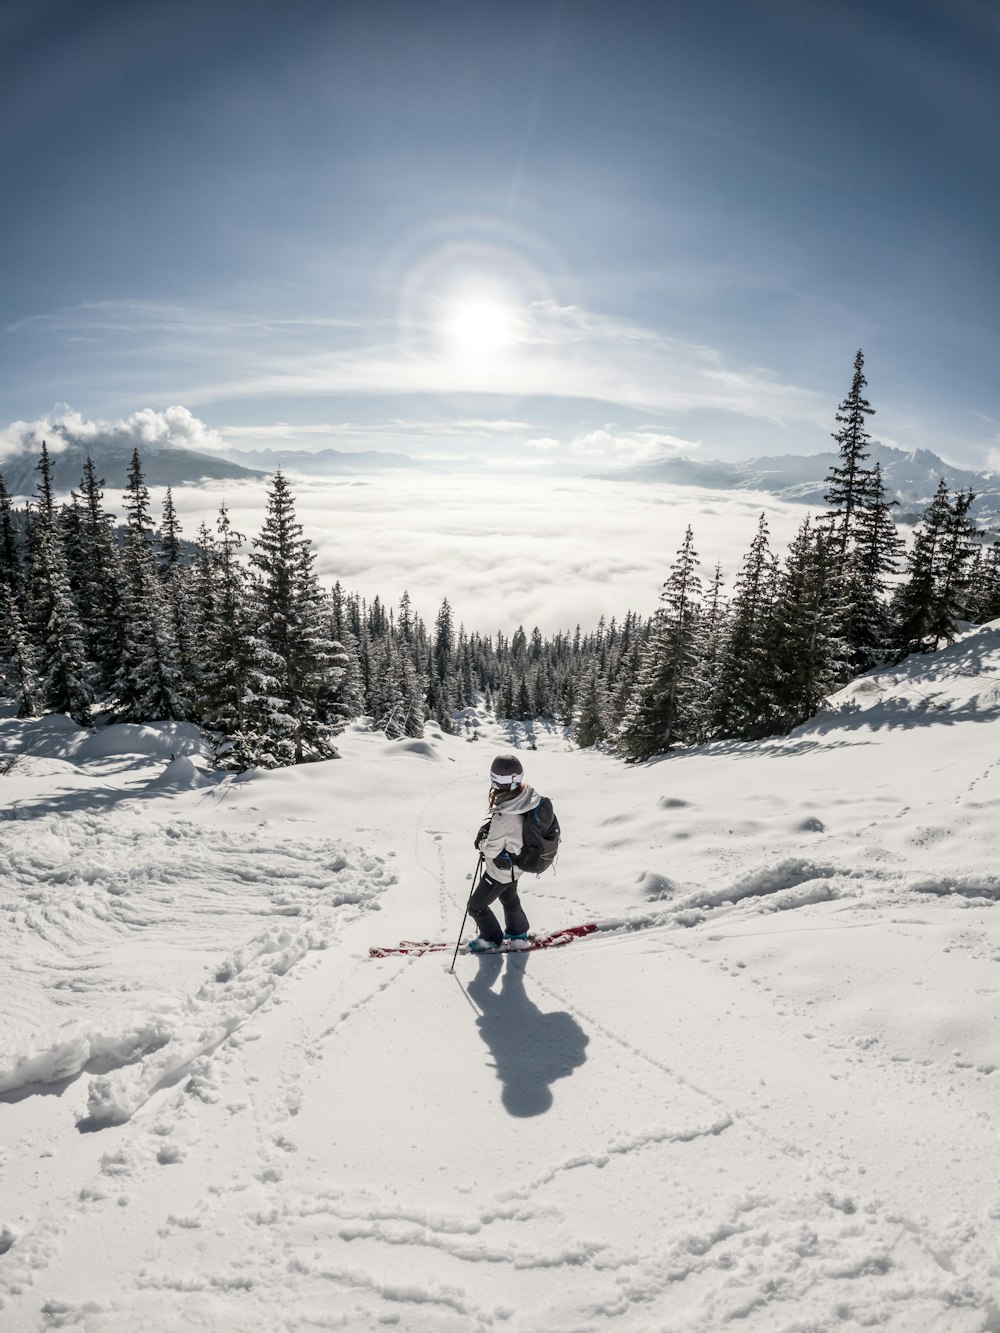 persoon in rode jas en blauwe broek die overdag ski-bladen berijdt op met sneeuw bedekte grond